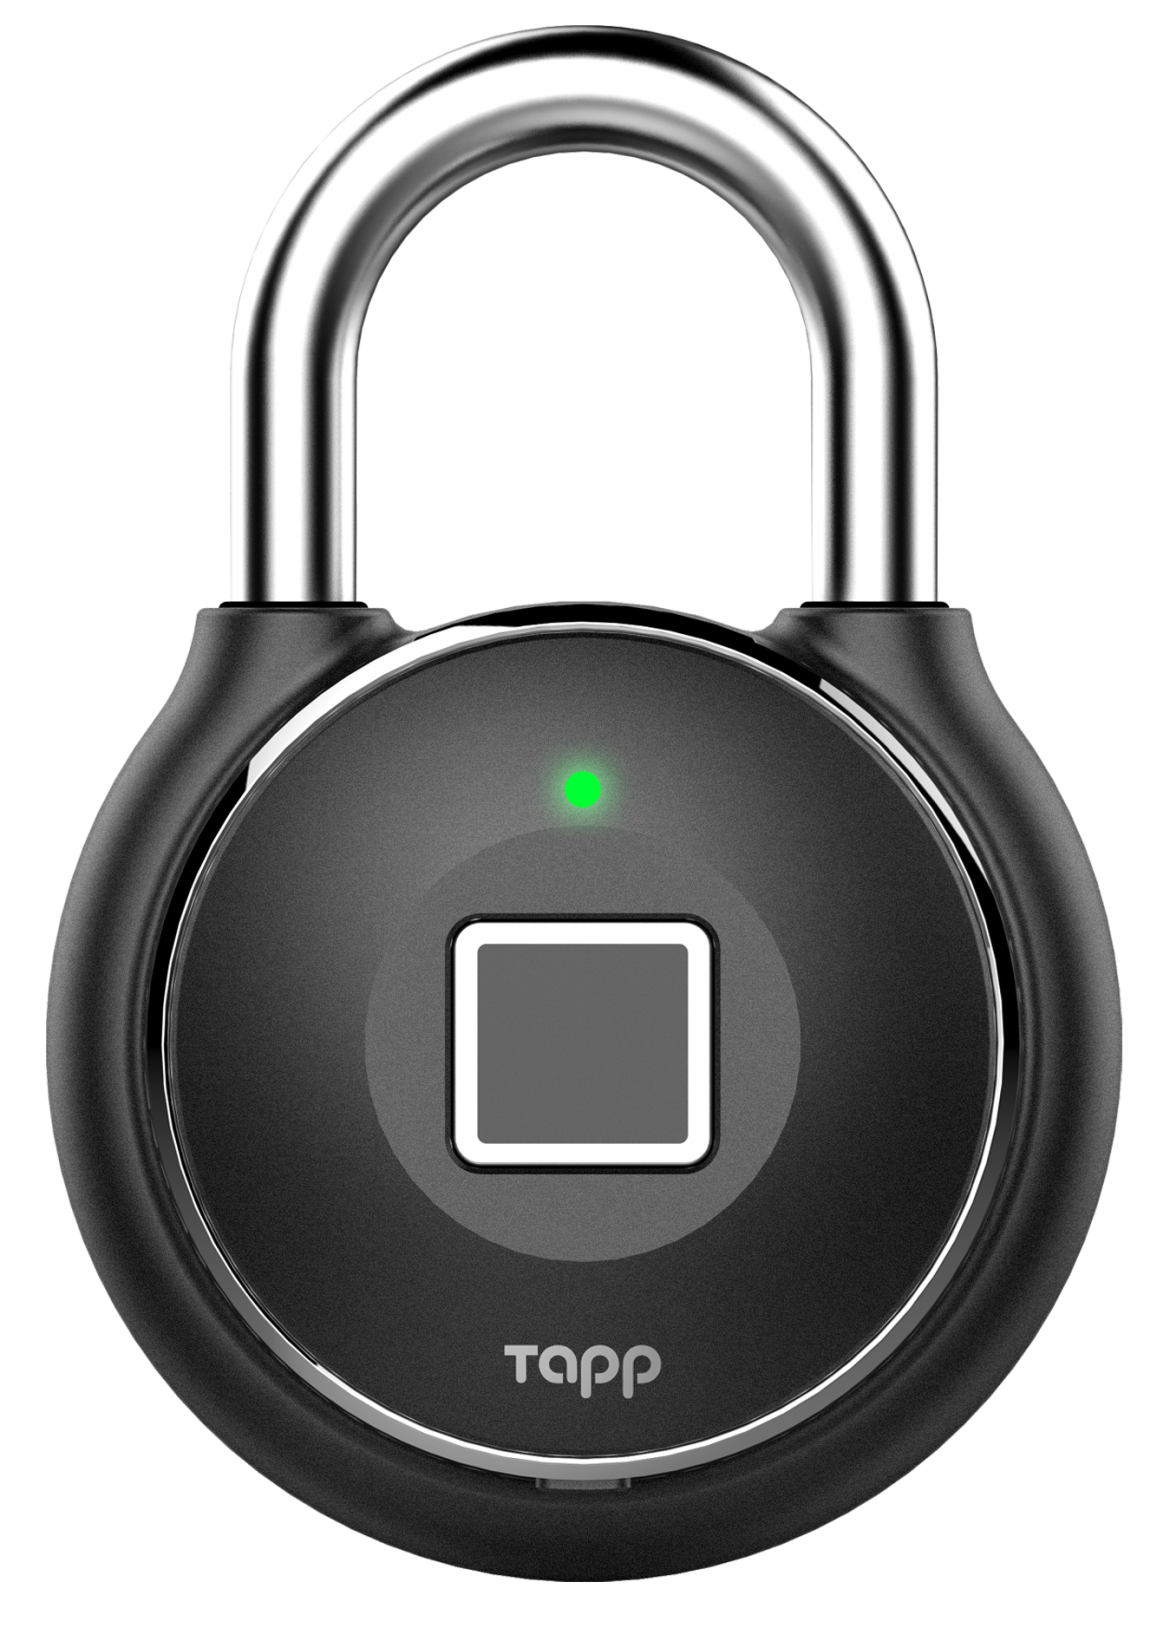 Tapplock Corp smart Lock midnight black Finish